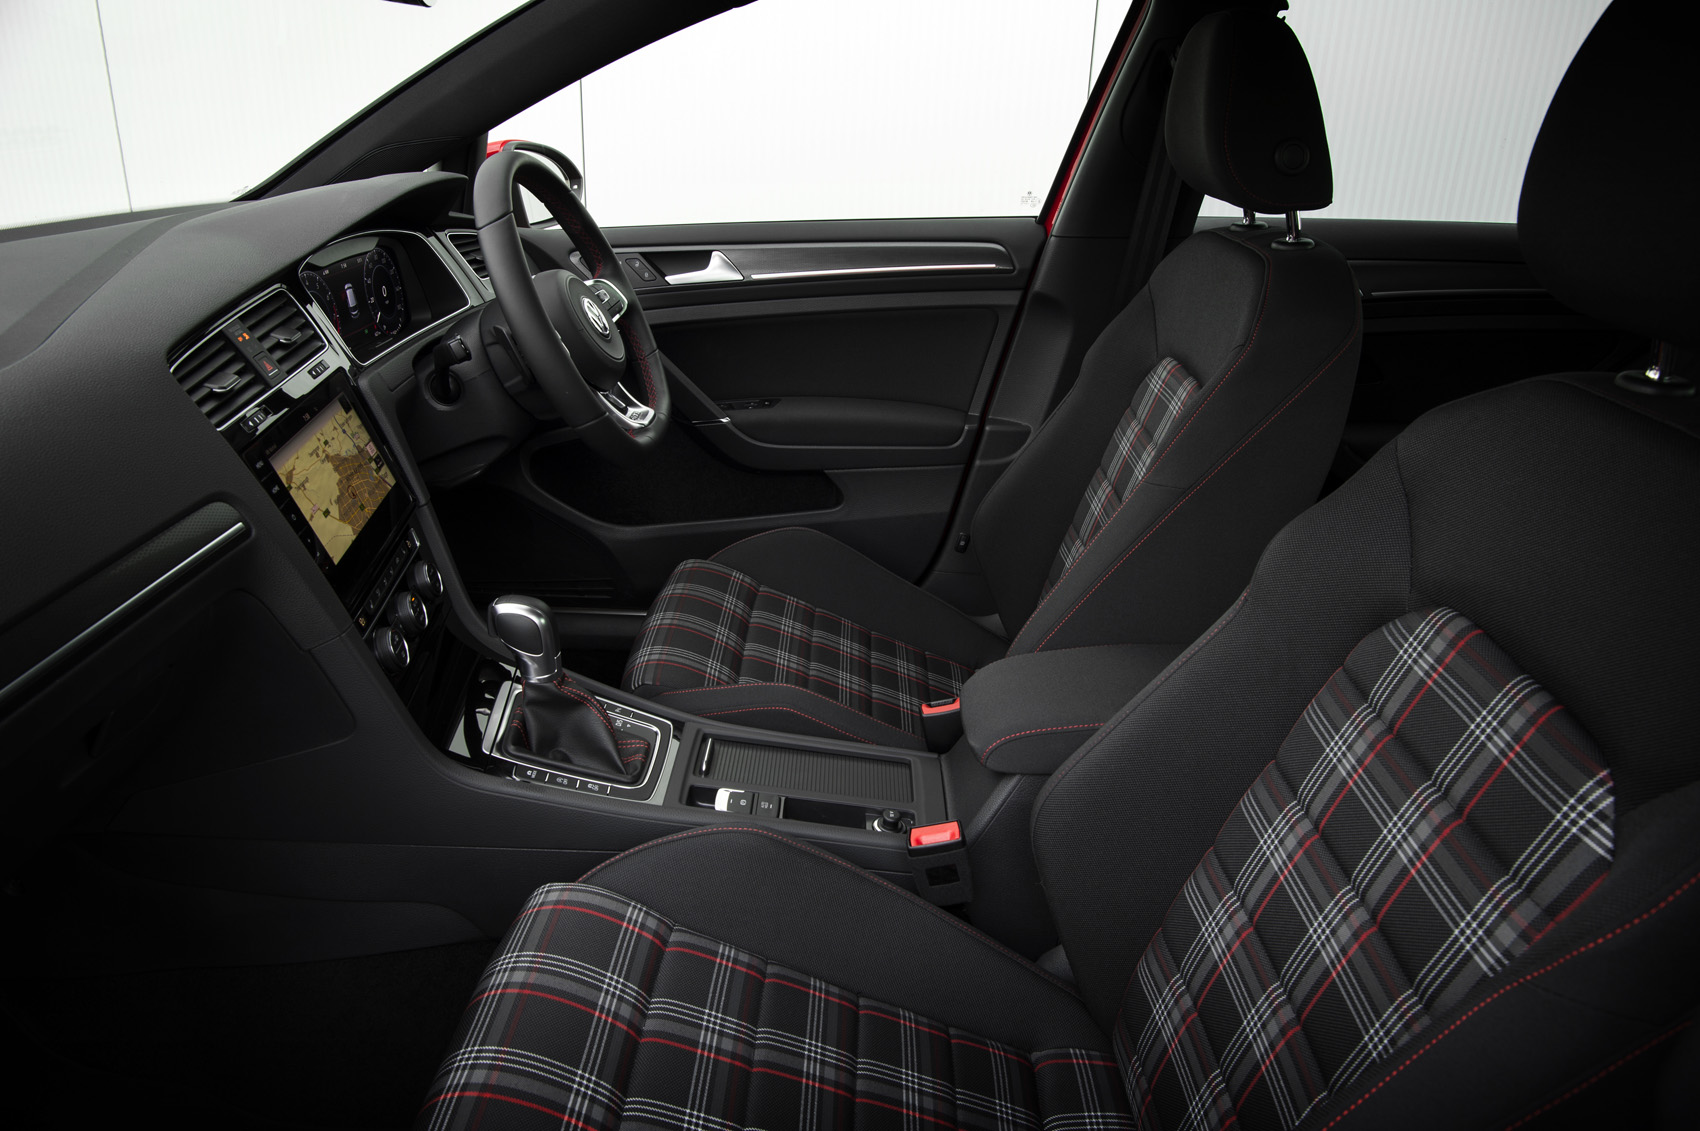 Volkswagen Golf GTI interior